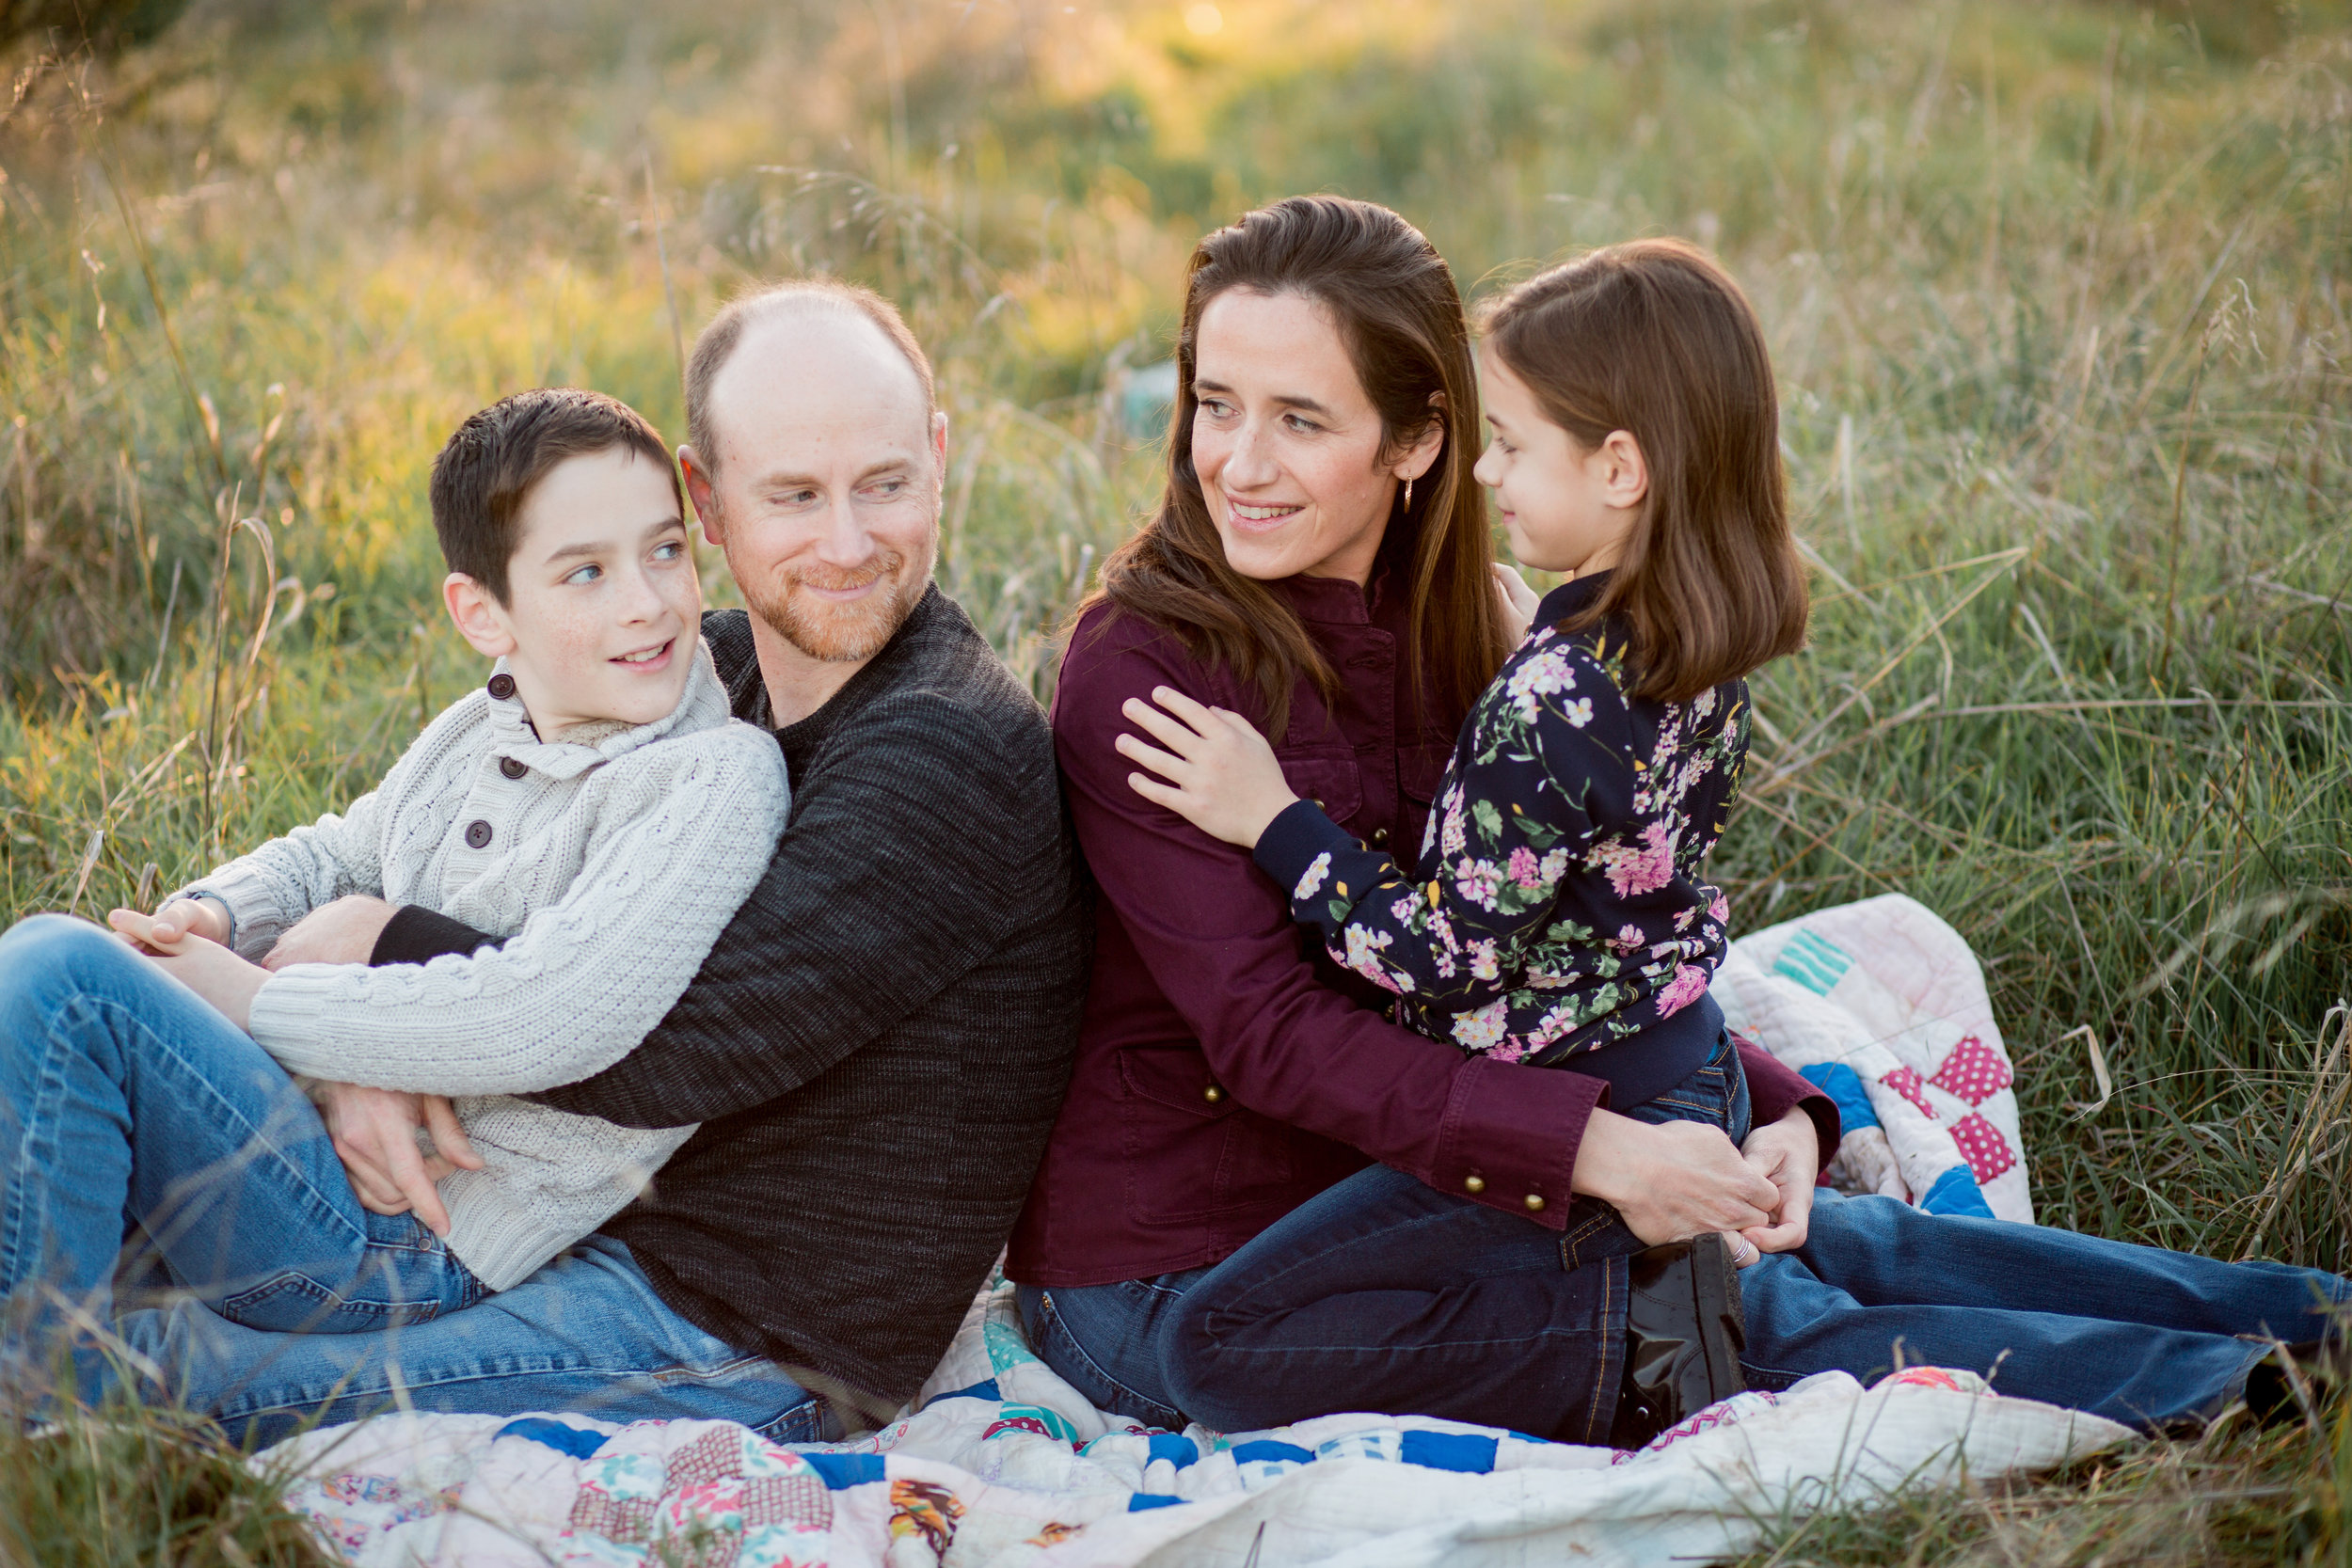 bre thurston family photography | san francisco california photographer bay area | outdoors lifestyle relaxed fun family session